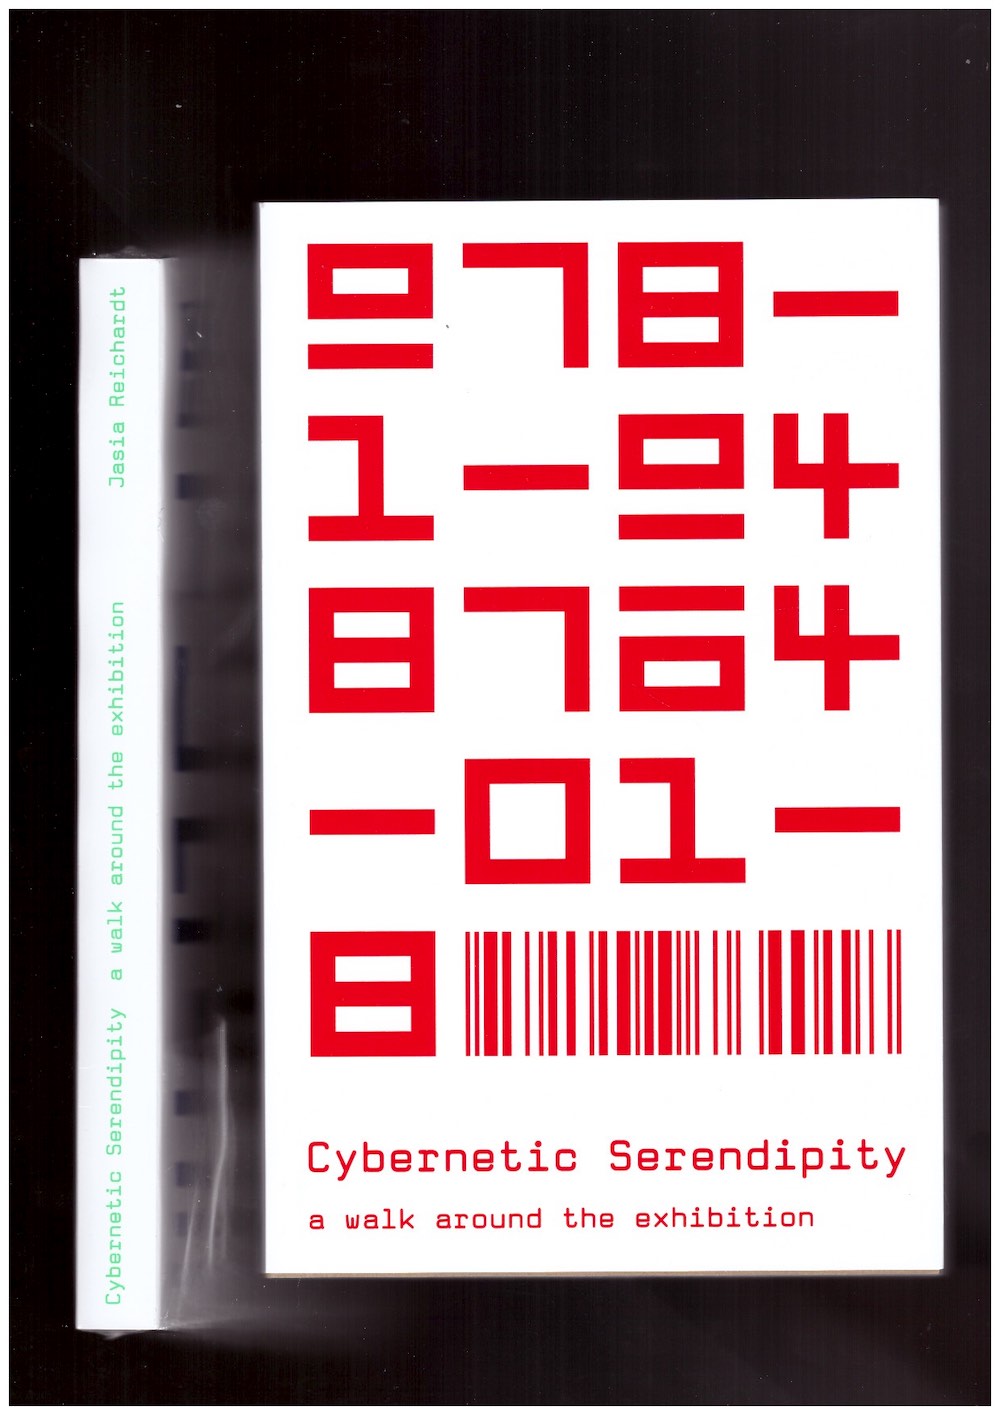 REICHARDT, Jasia - Cybernetic Serendipity – a walk around the exhibition